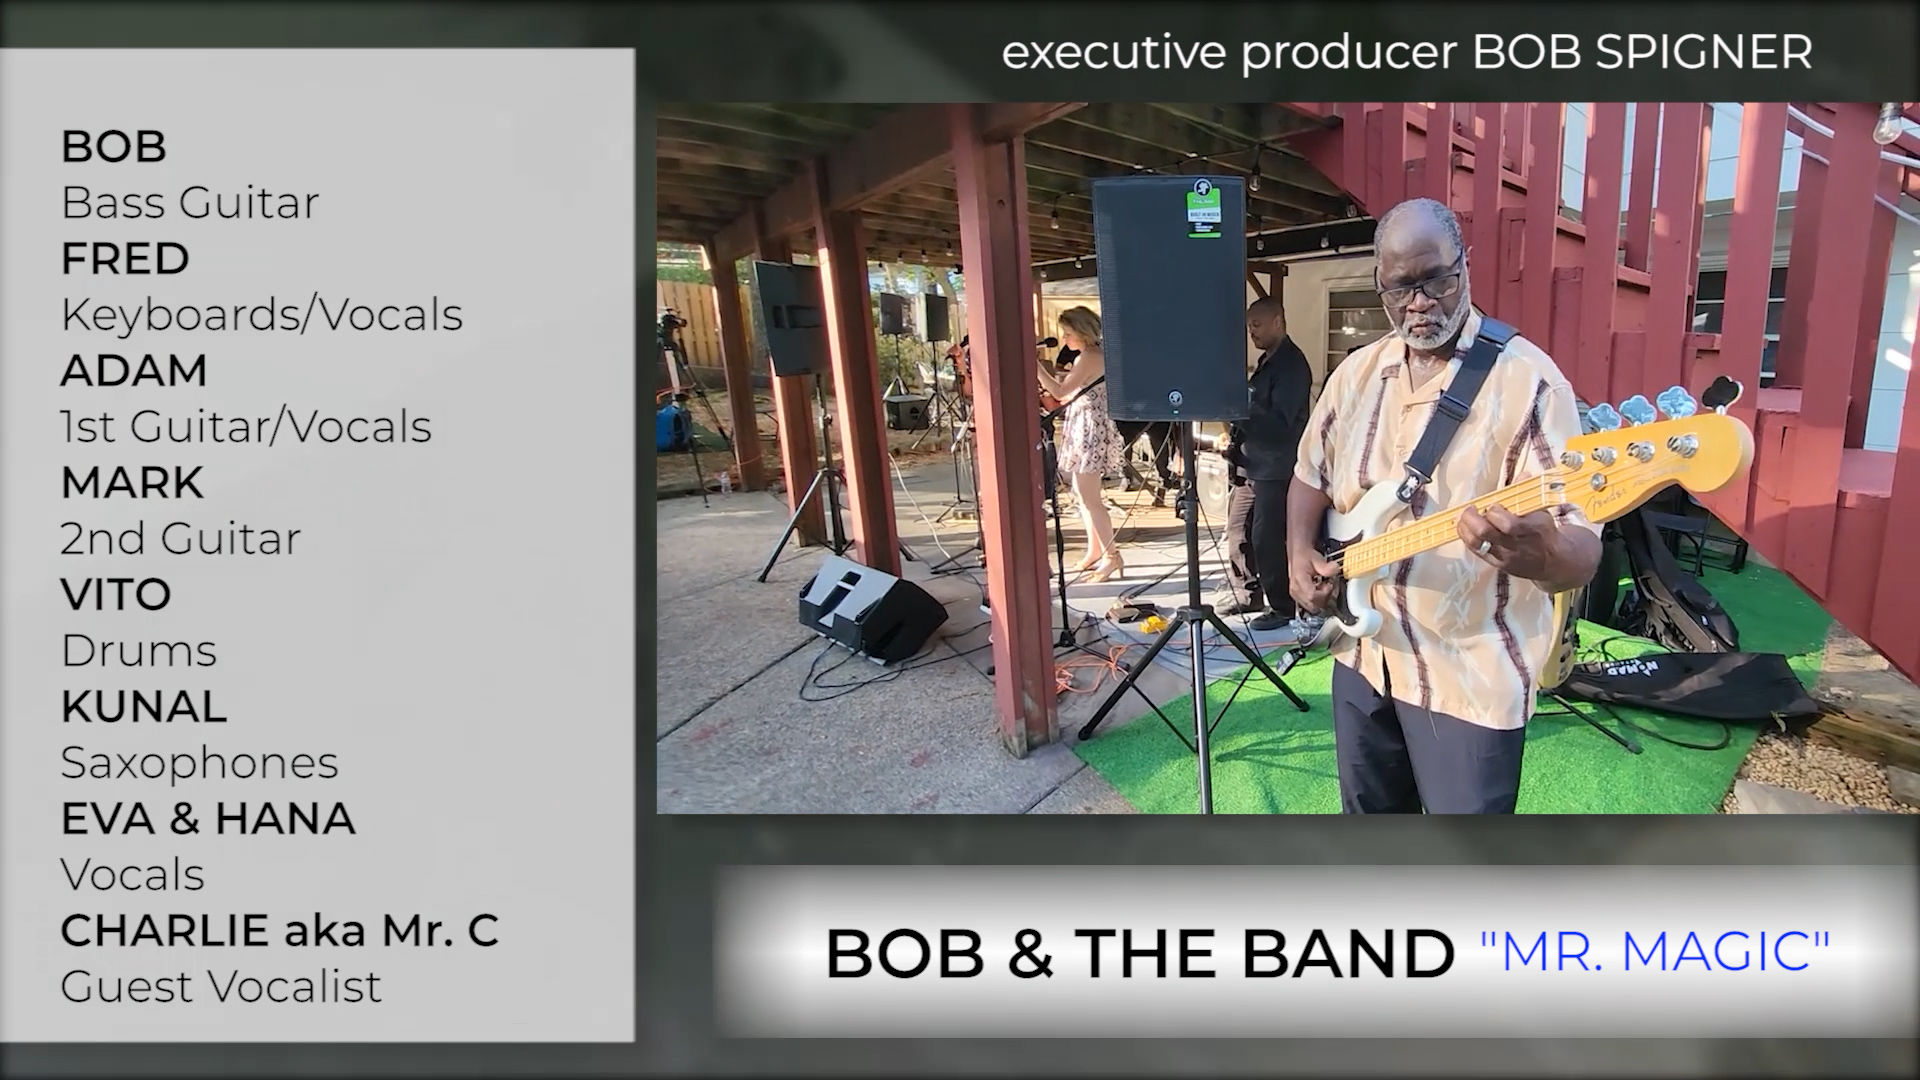 MR. MAGIC - Bob and The Band